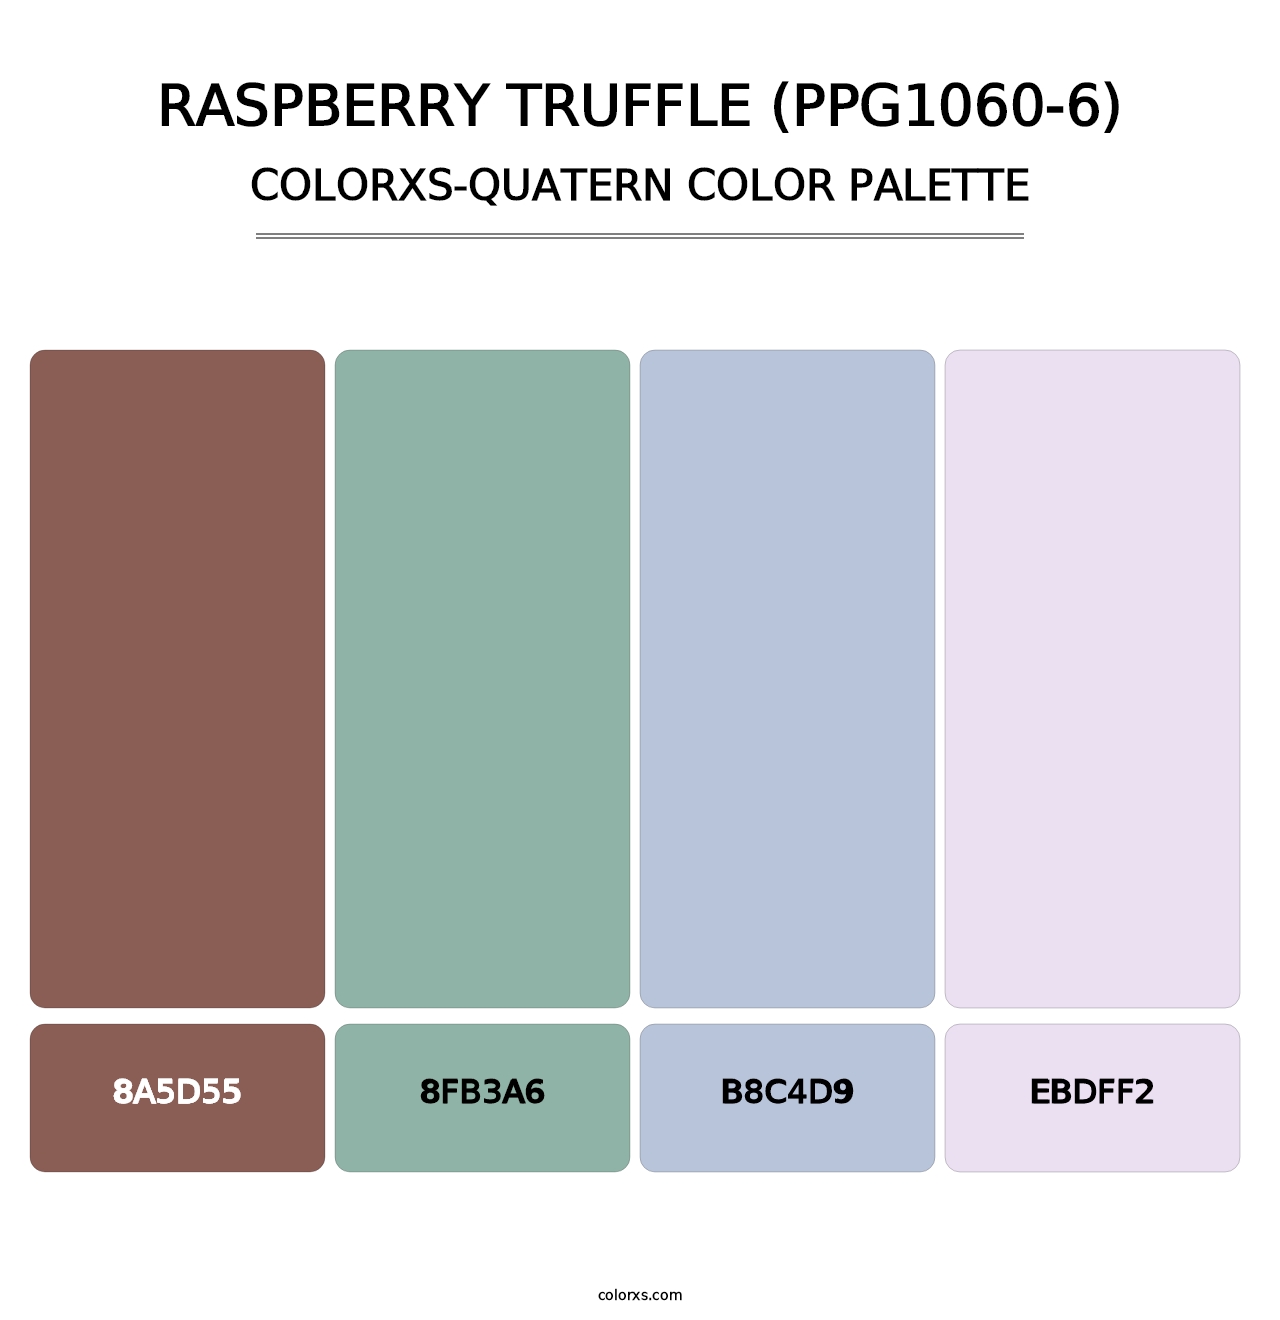 Raspberry Truffle (PPG1060-6) - Colorxs Quatern Palette